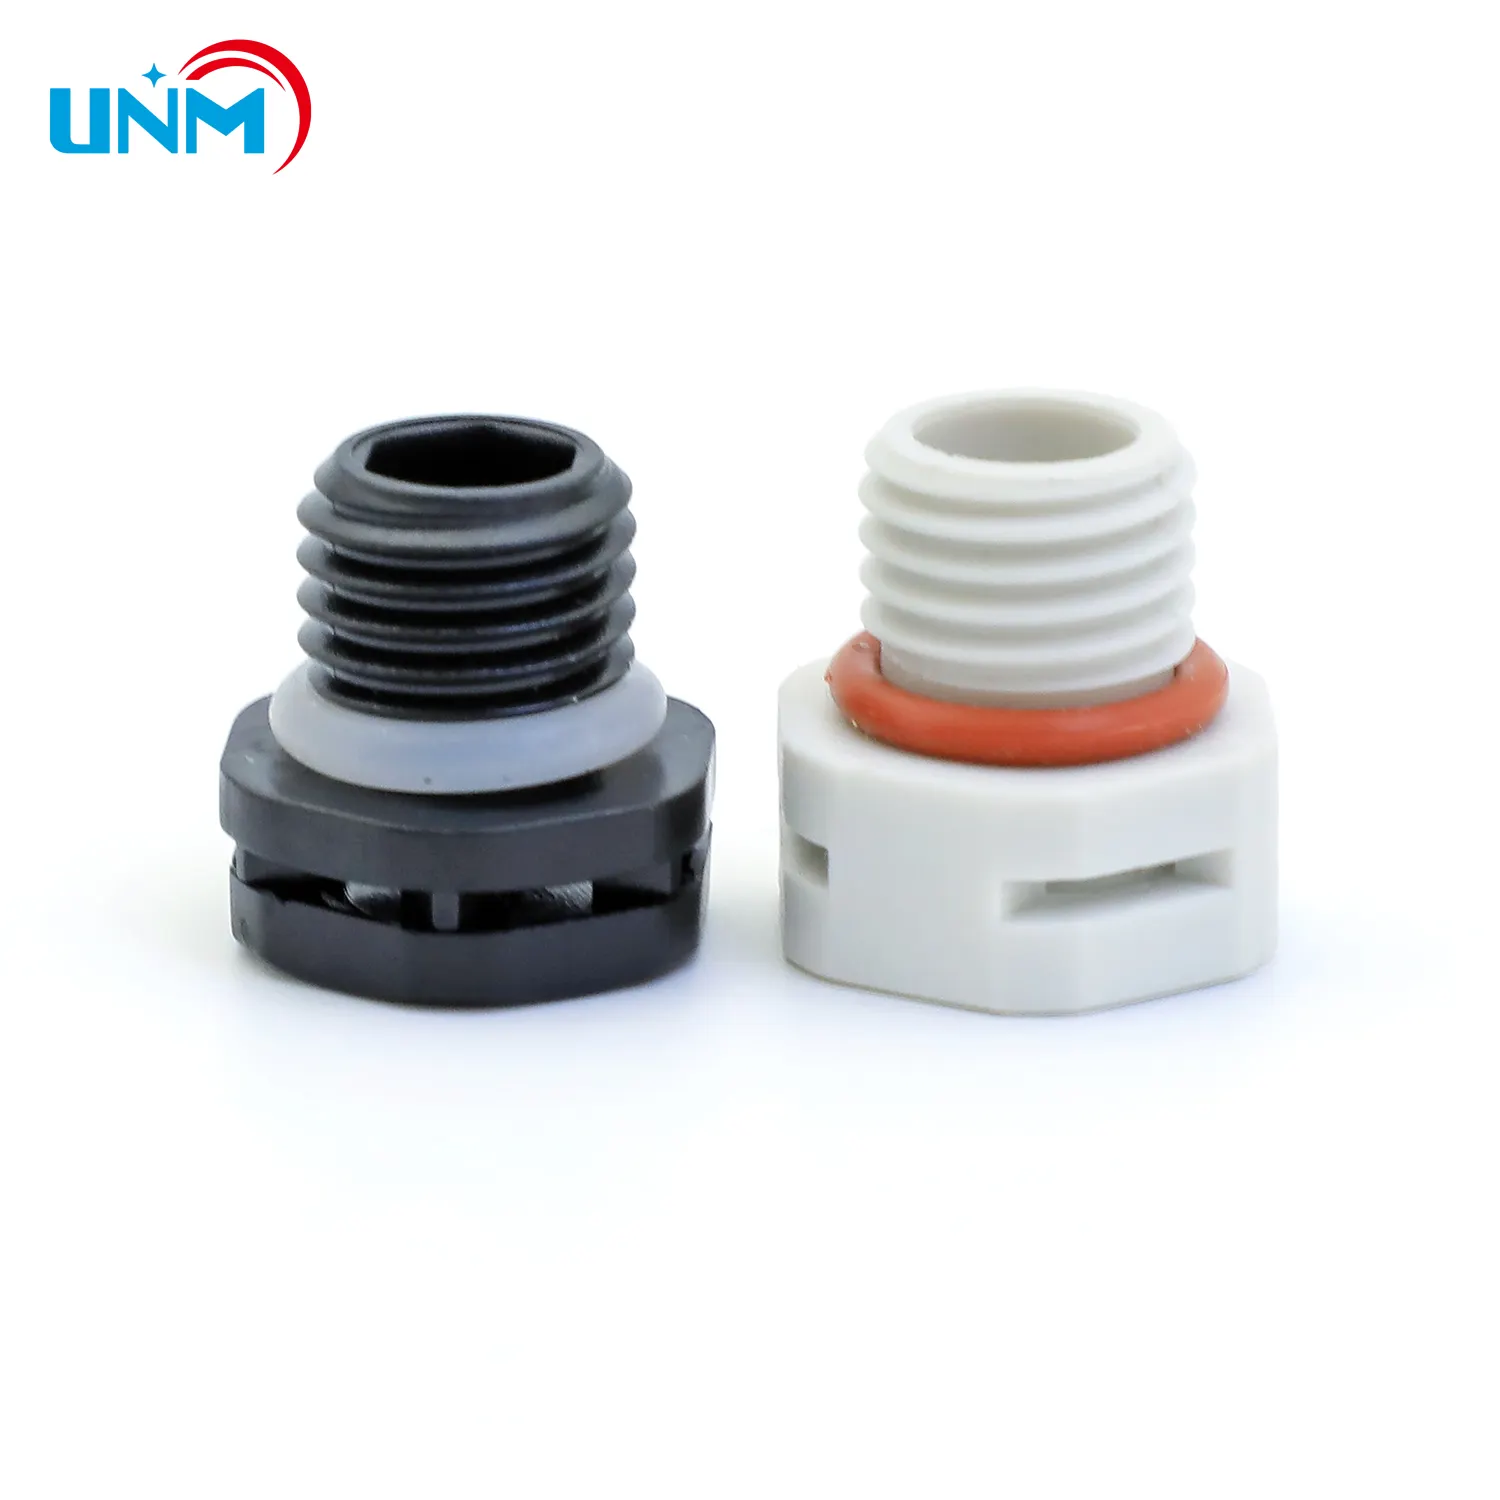 UNM M12 sumbat ventilasi plastik katup napas nilon nindustrial untuk aplikasi luar ruangan